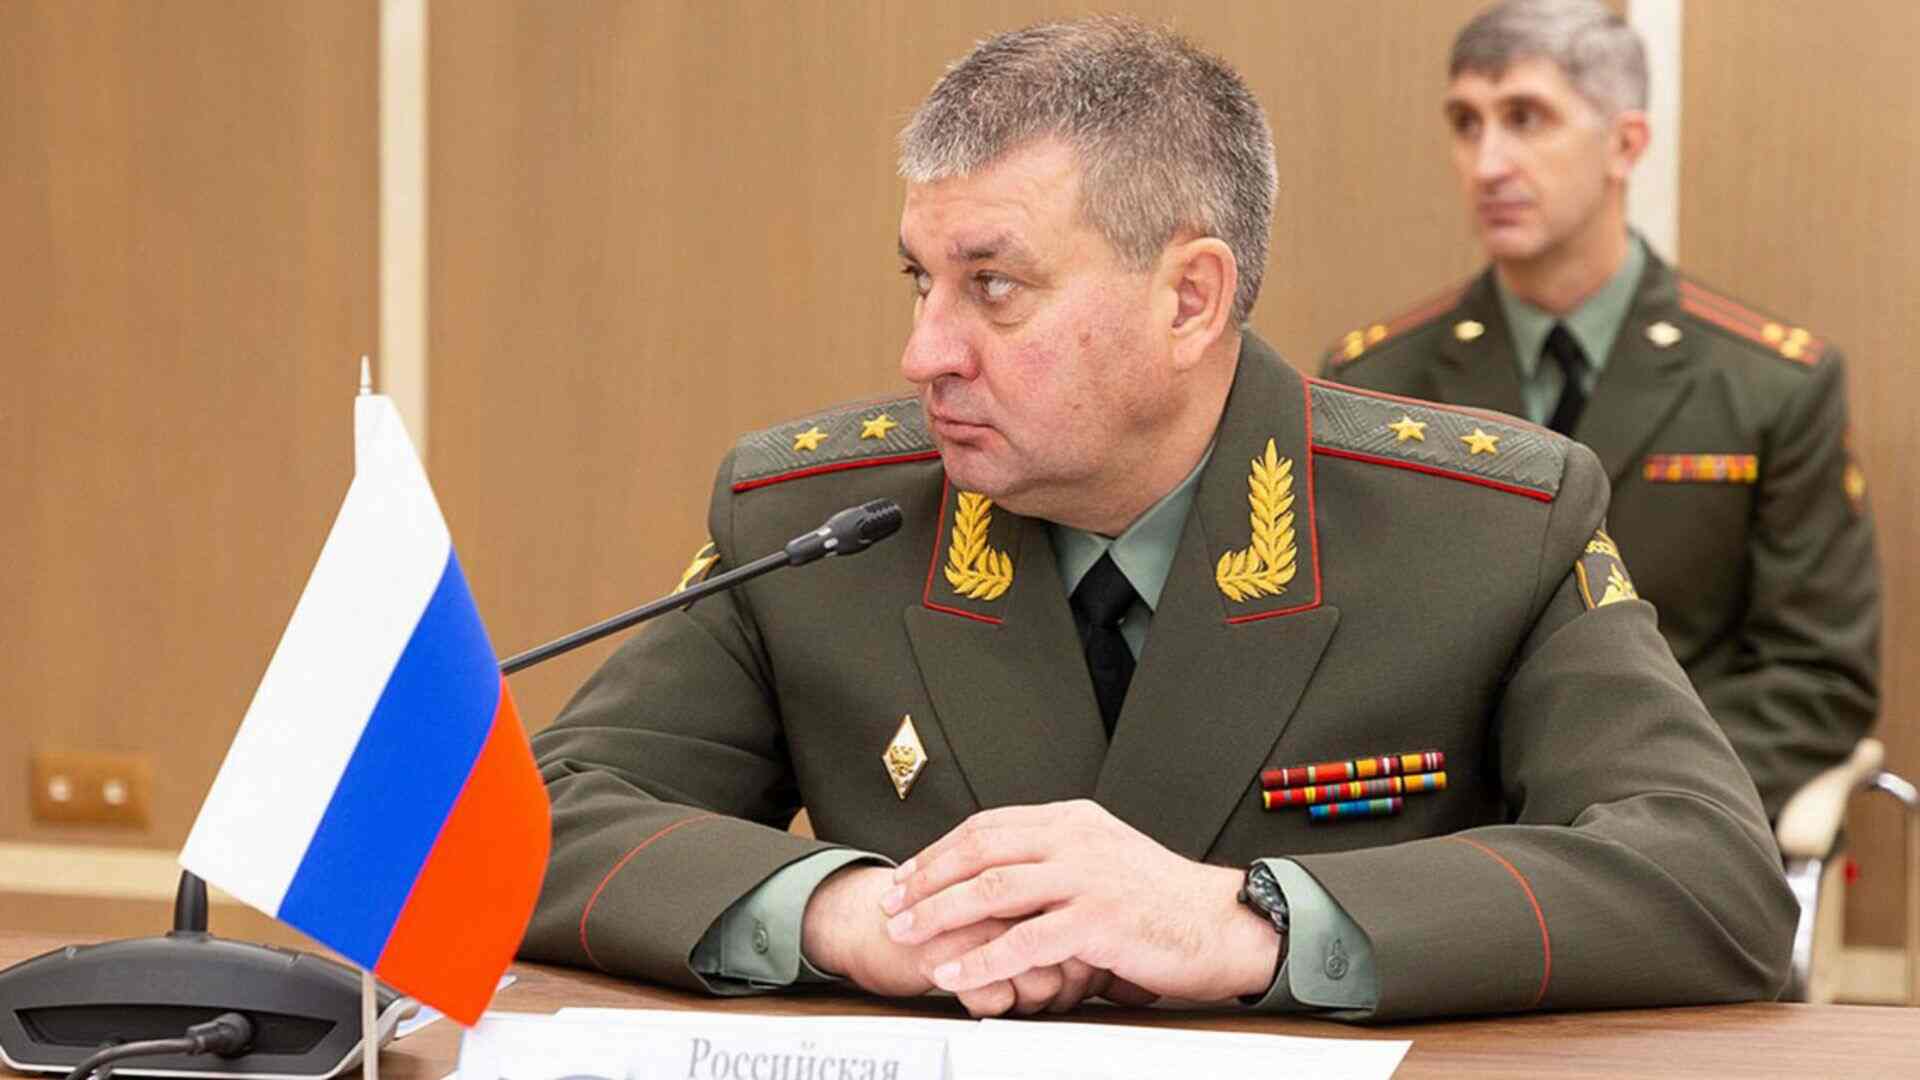 Russia: Deputy Head Of The Army’s General Staff Arrested On Bribery Suspicion